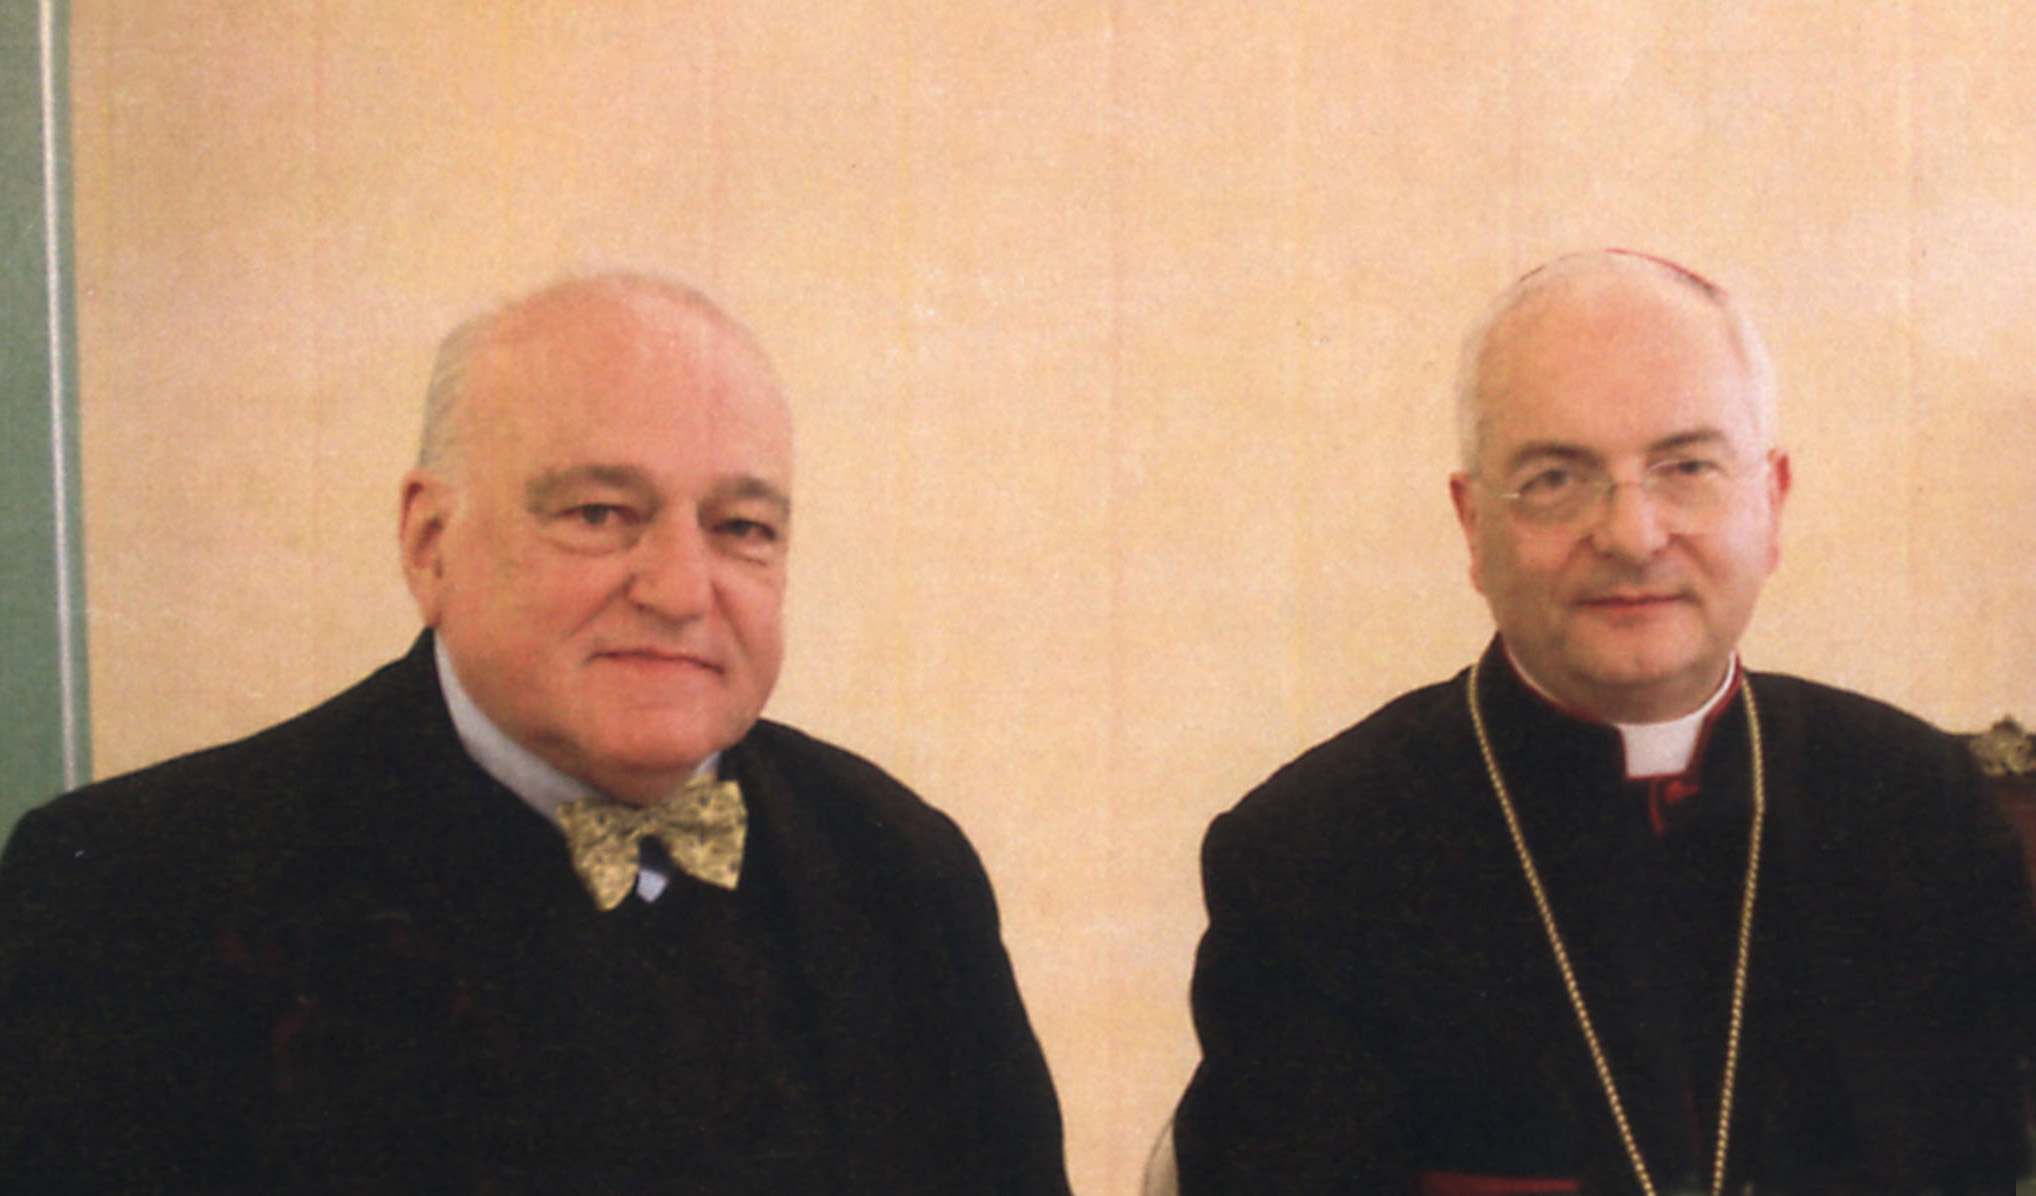 Massarani e o cardeal Mauro Piacenza, no Vaticano<a style='float:right;color:#ccc' href='https://www3.al.sp.gov.br/repositorio/noticia/03-2008/Massarani corte.jpg' target=_blank><i class='bi bi-zoom-in'></i> Clique para ver a imagem </a>